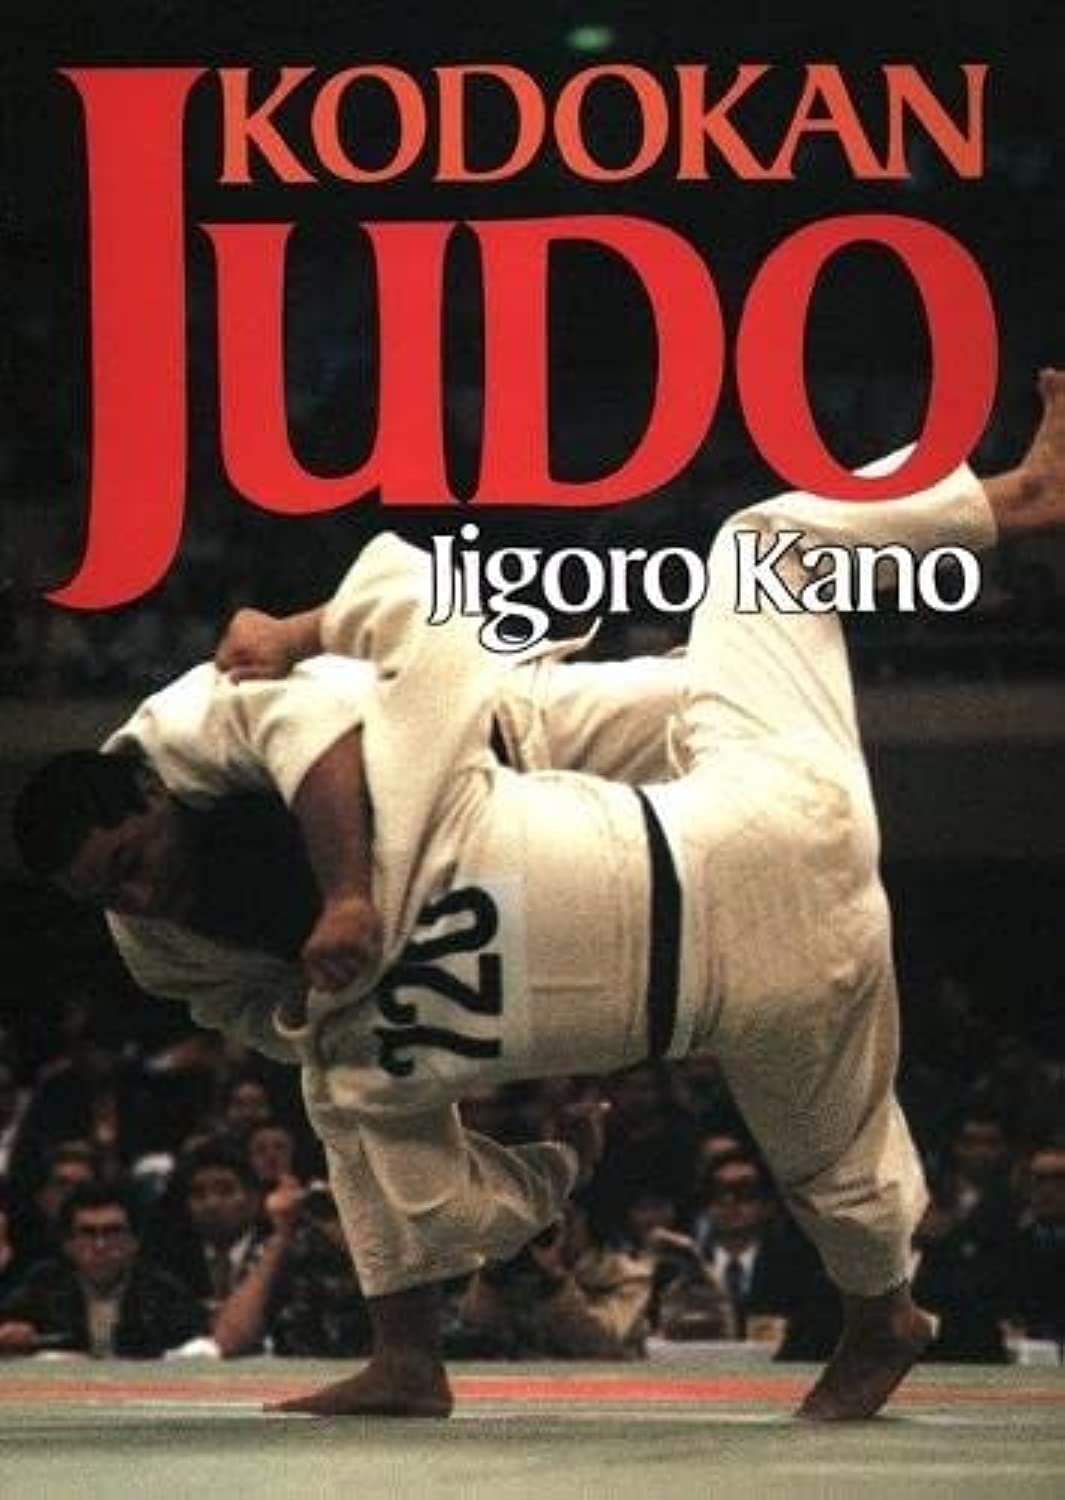 Libro Kodokan Judo de Jigoro Kano (seminuevo)